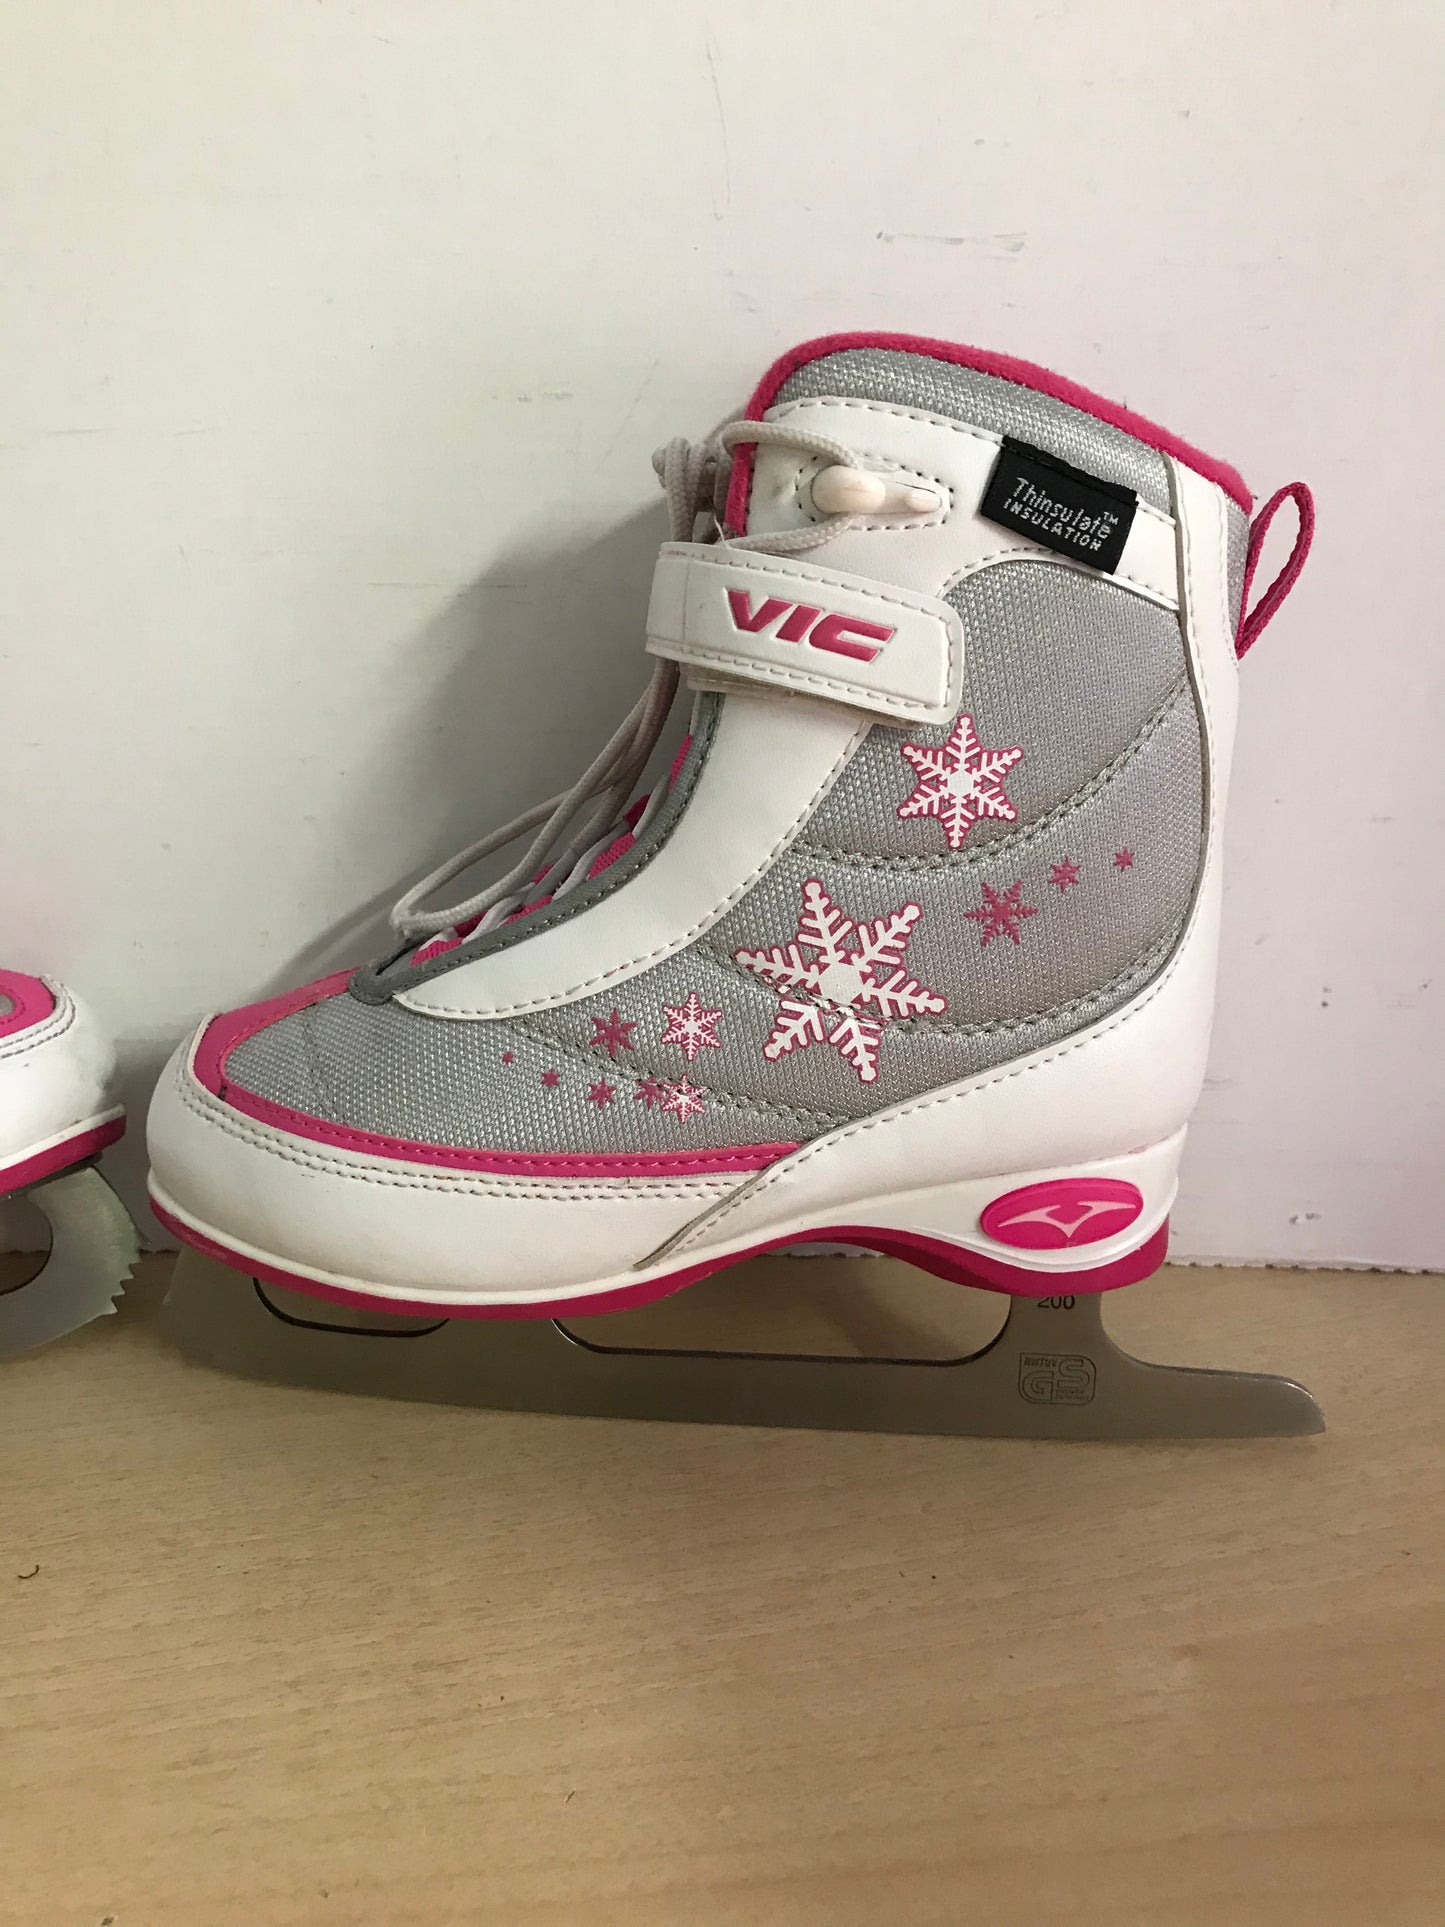 Figure Skates Child Size 11 Vic Soft Skates White Pink Grey Like New